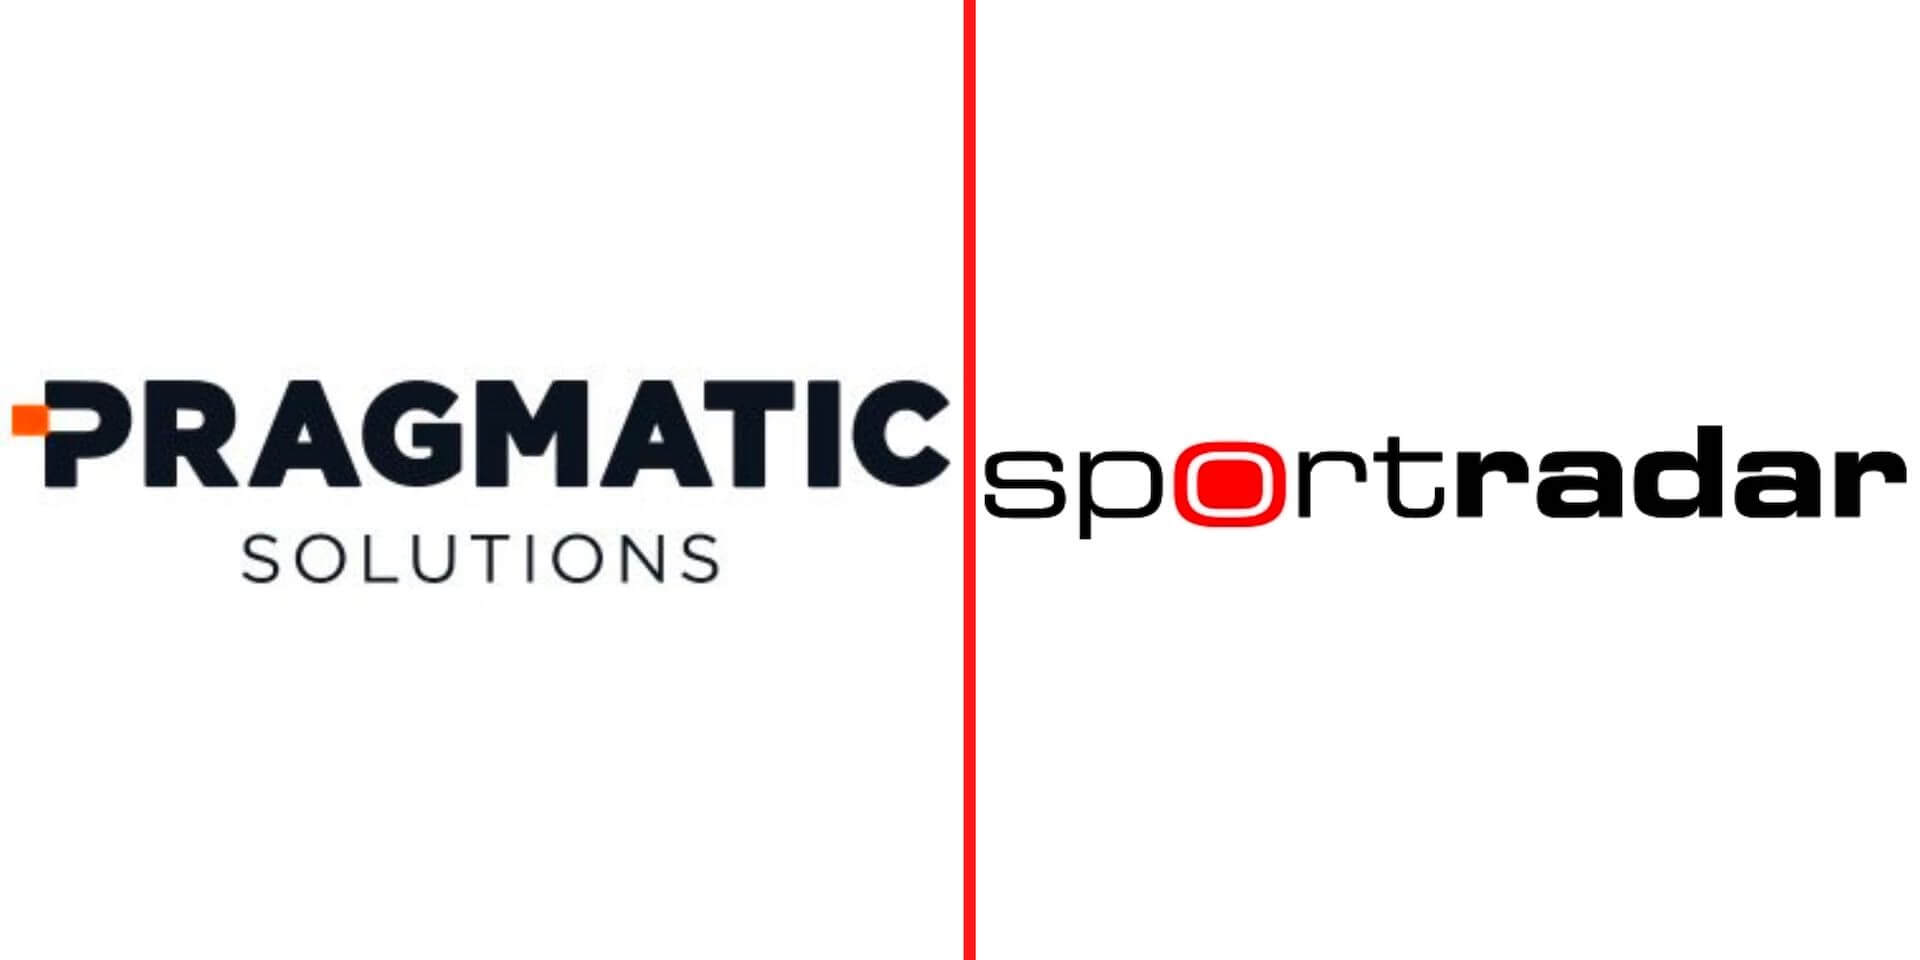 Pragmatic Solutions Ink Deal With Sportradar